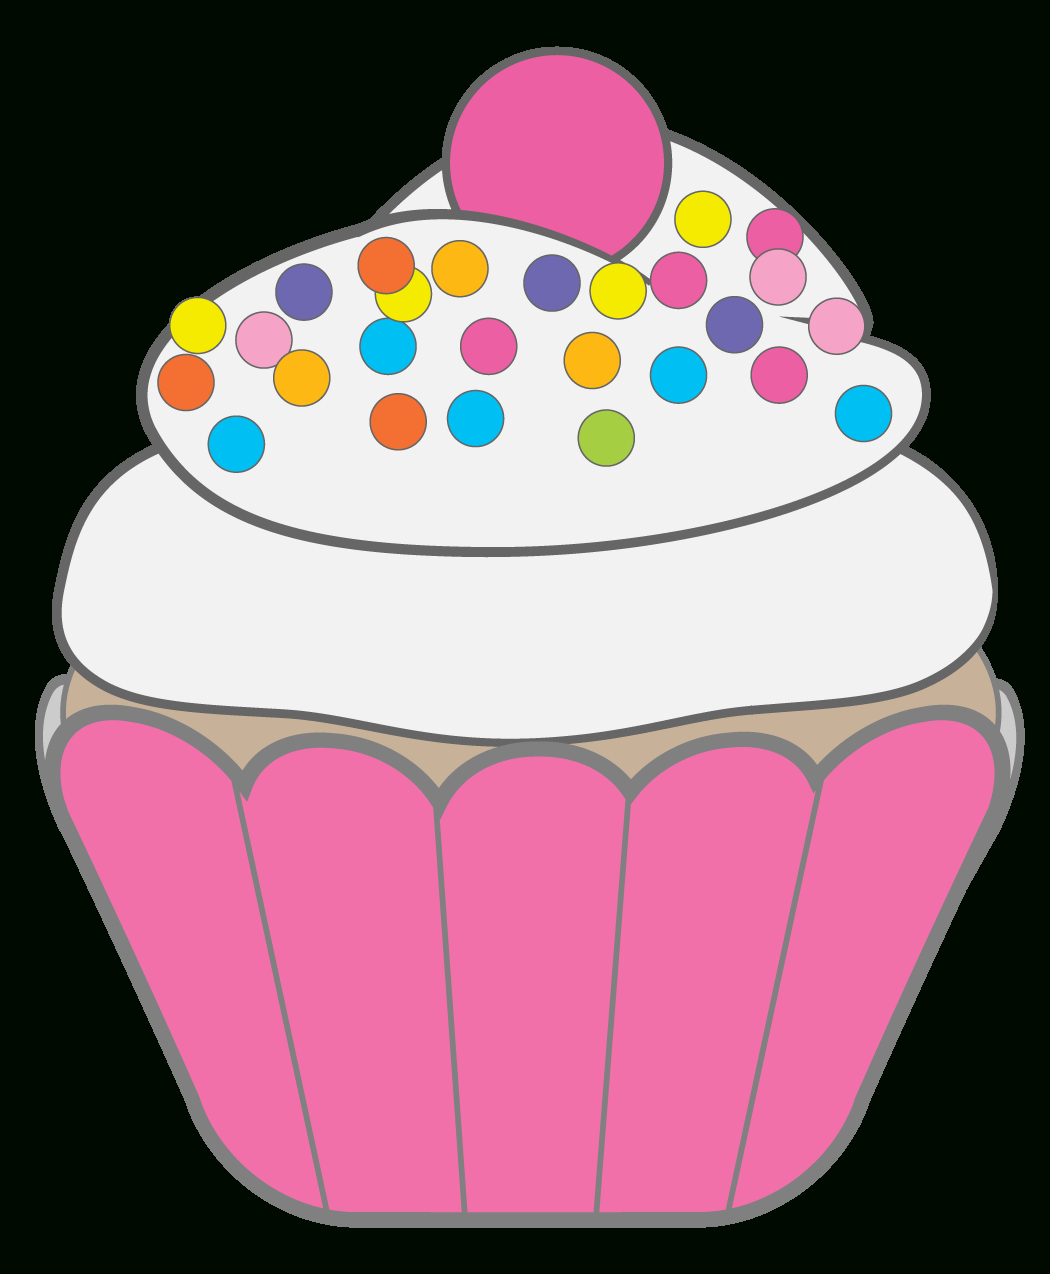 Cupcakes / Muffins | Cupcakes | Birthday Cake Clip Art, Cupcake - Free Printable Cupcake Clipart